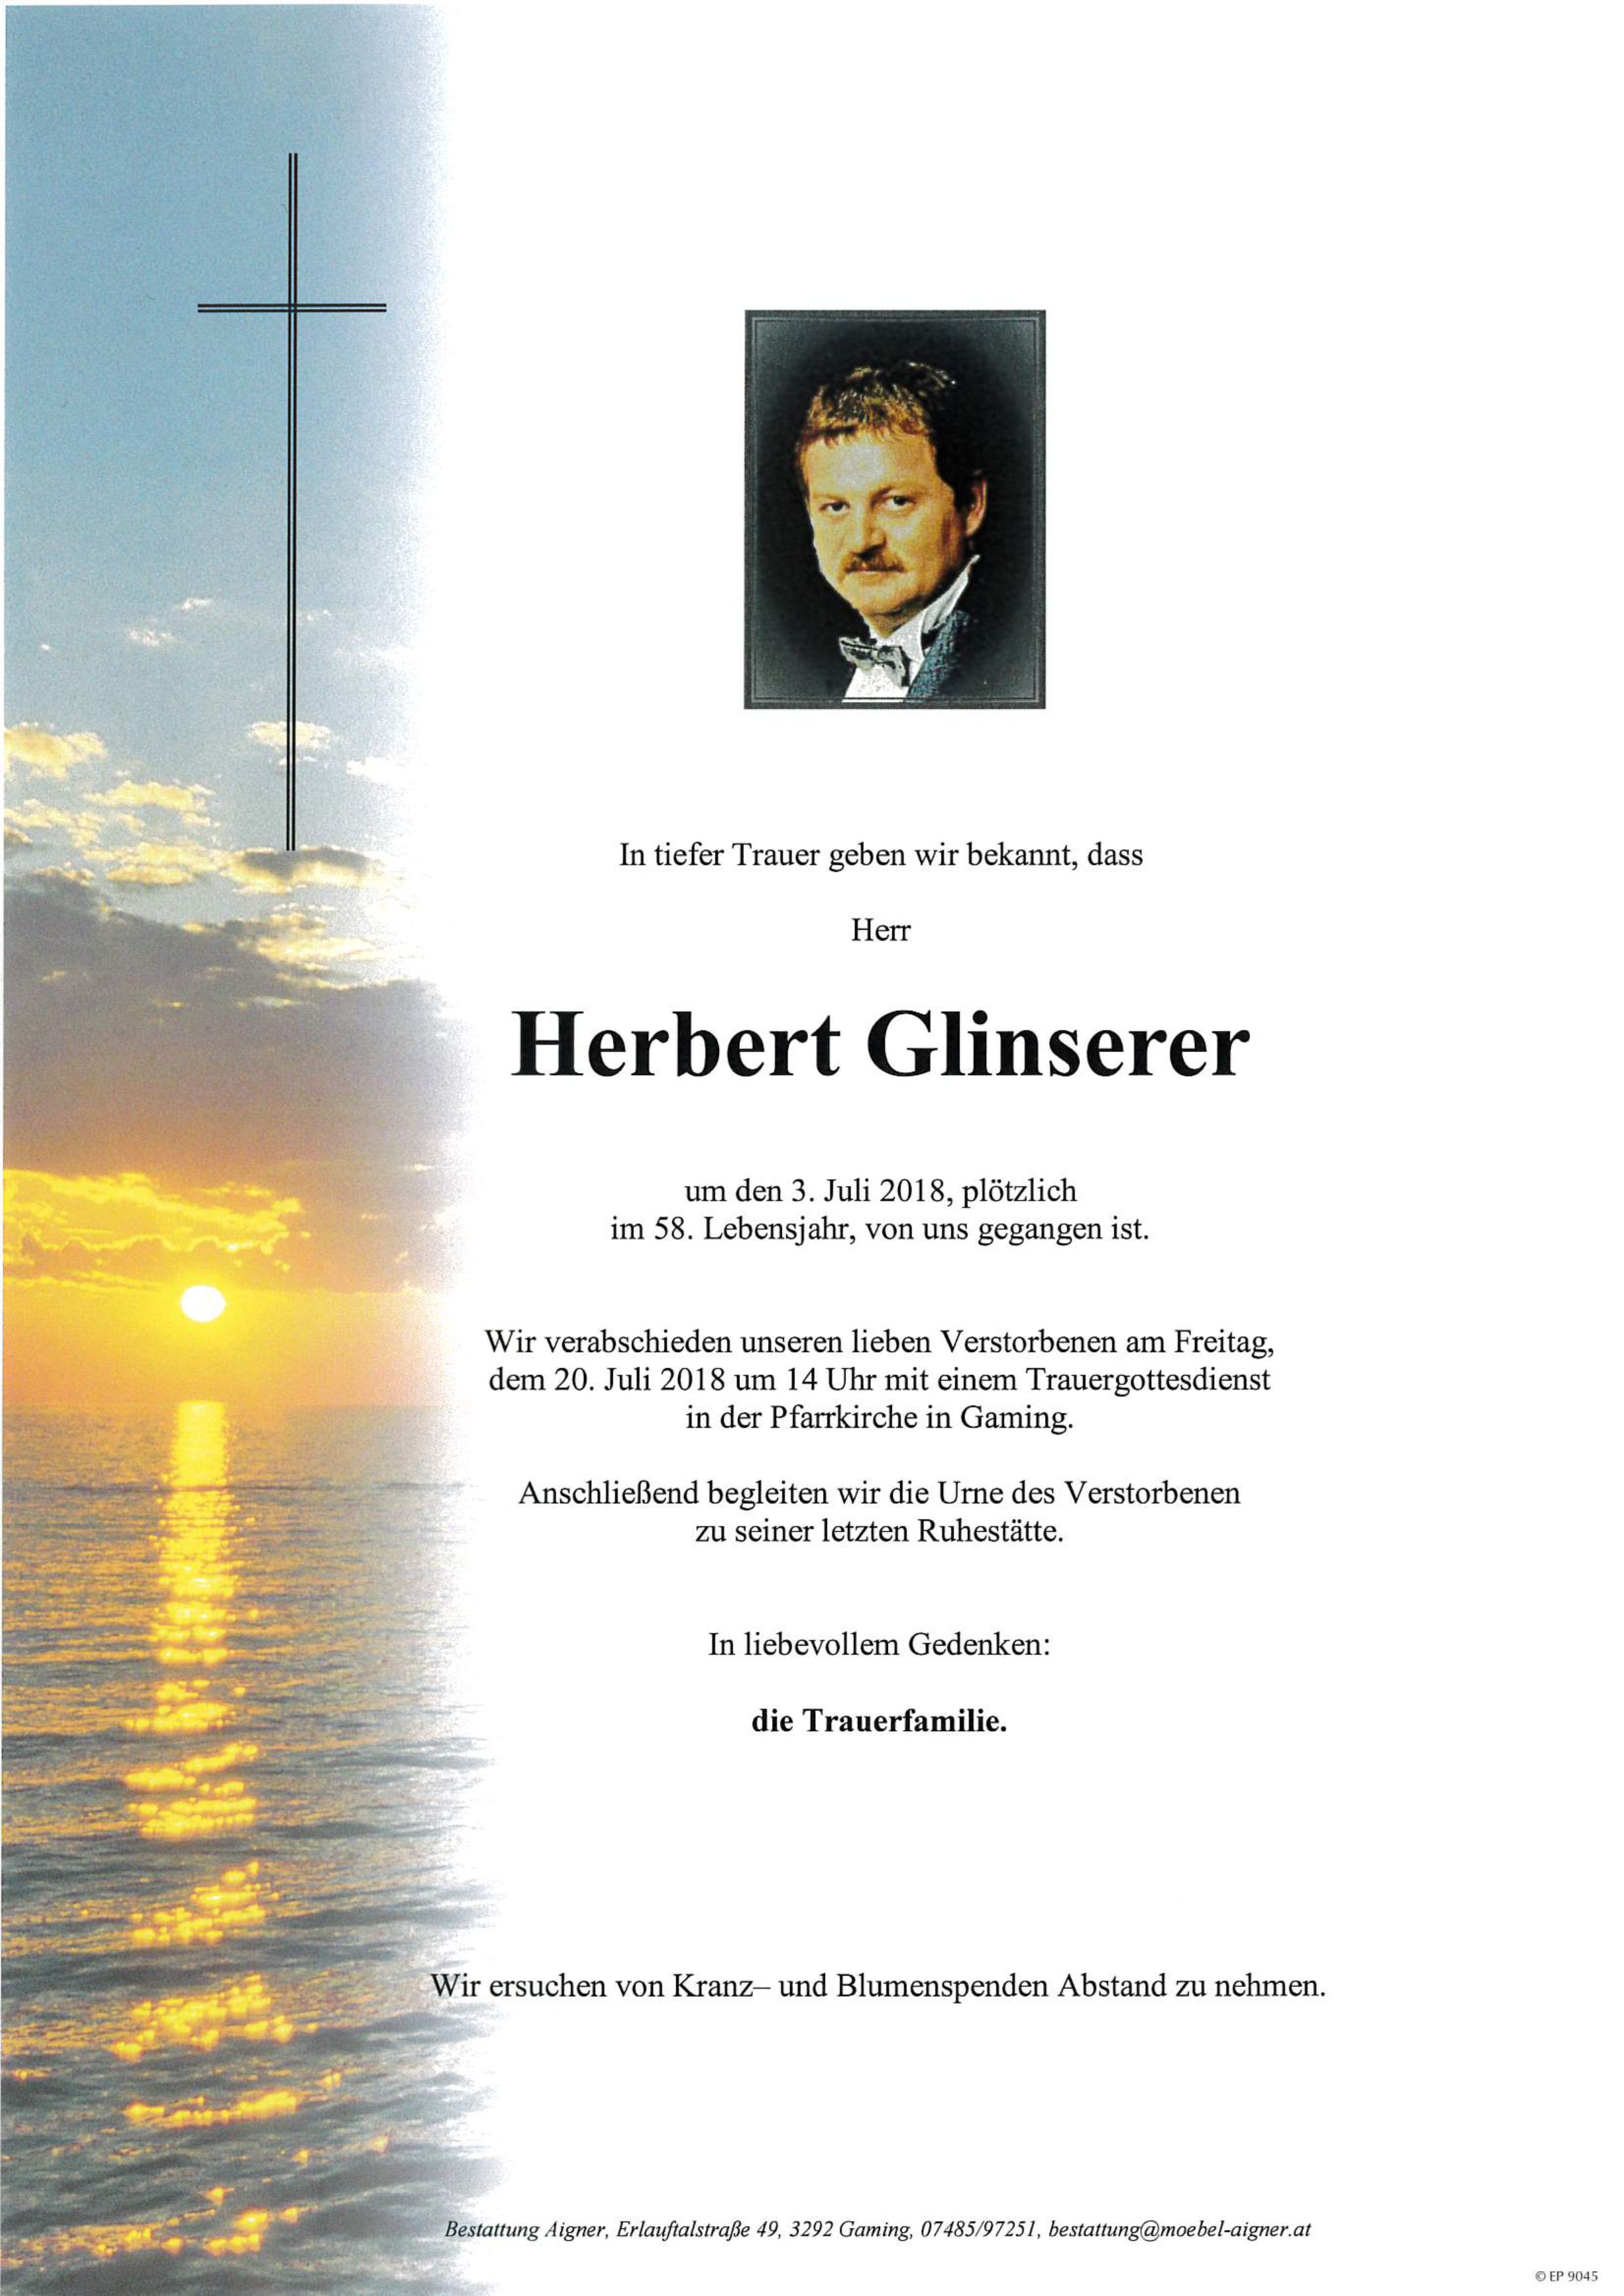 Herbert Glinserer